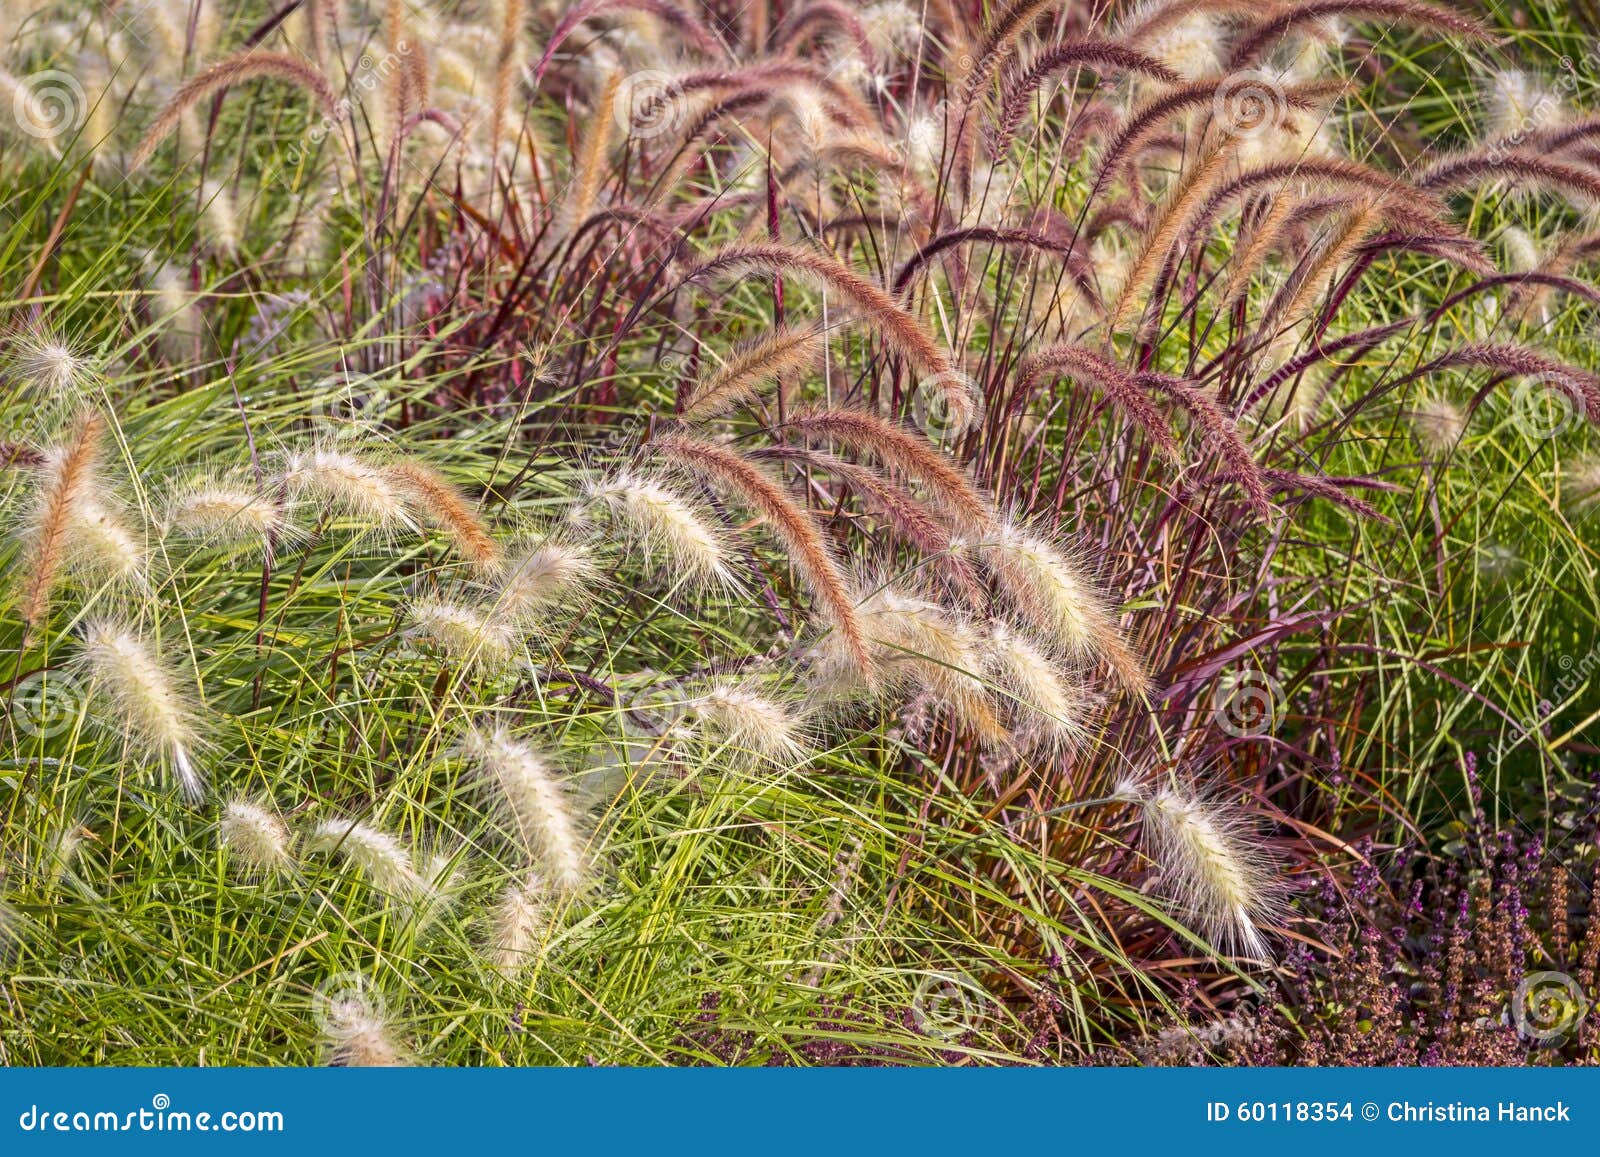 different ornamental grasses